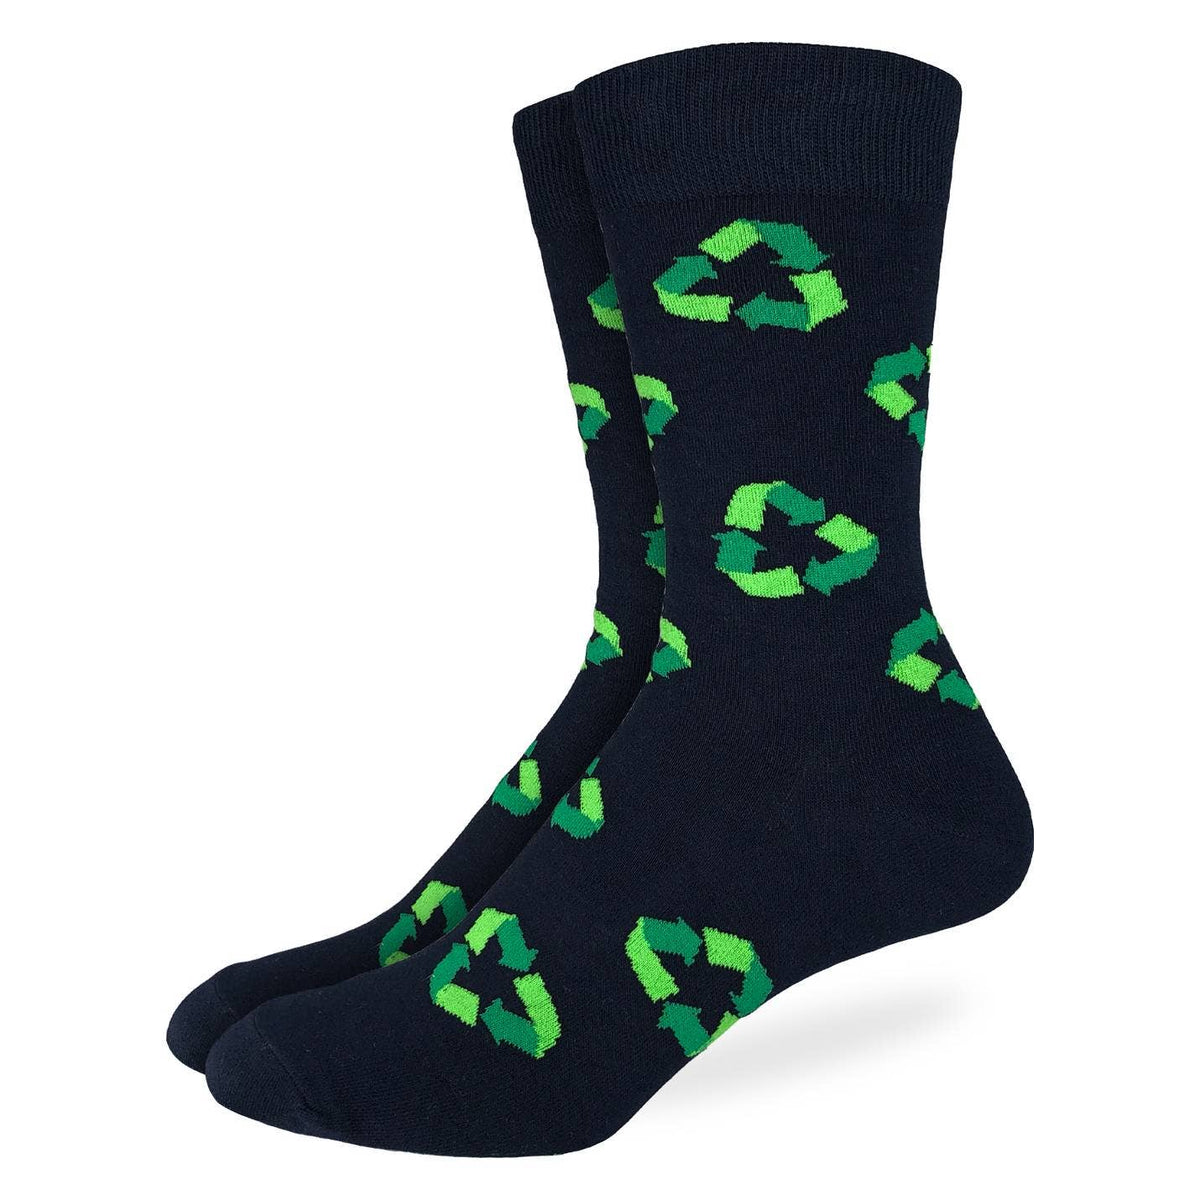 Recycle Socks